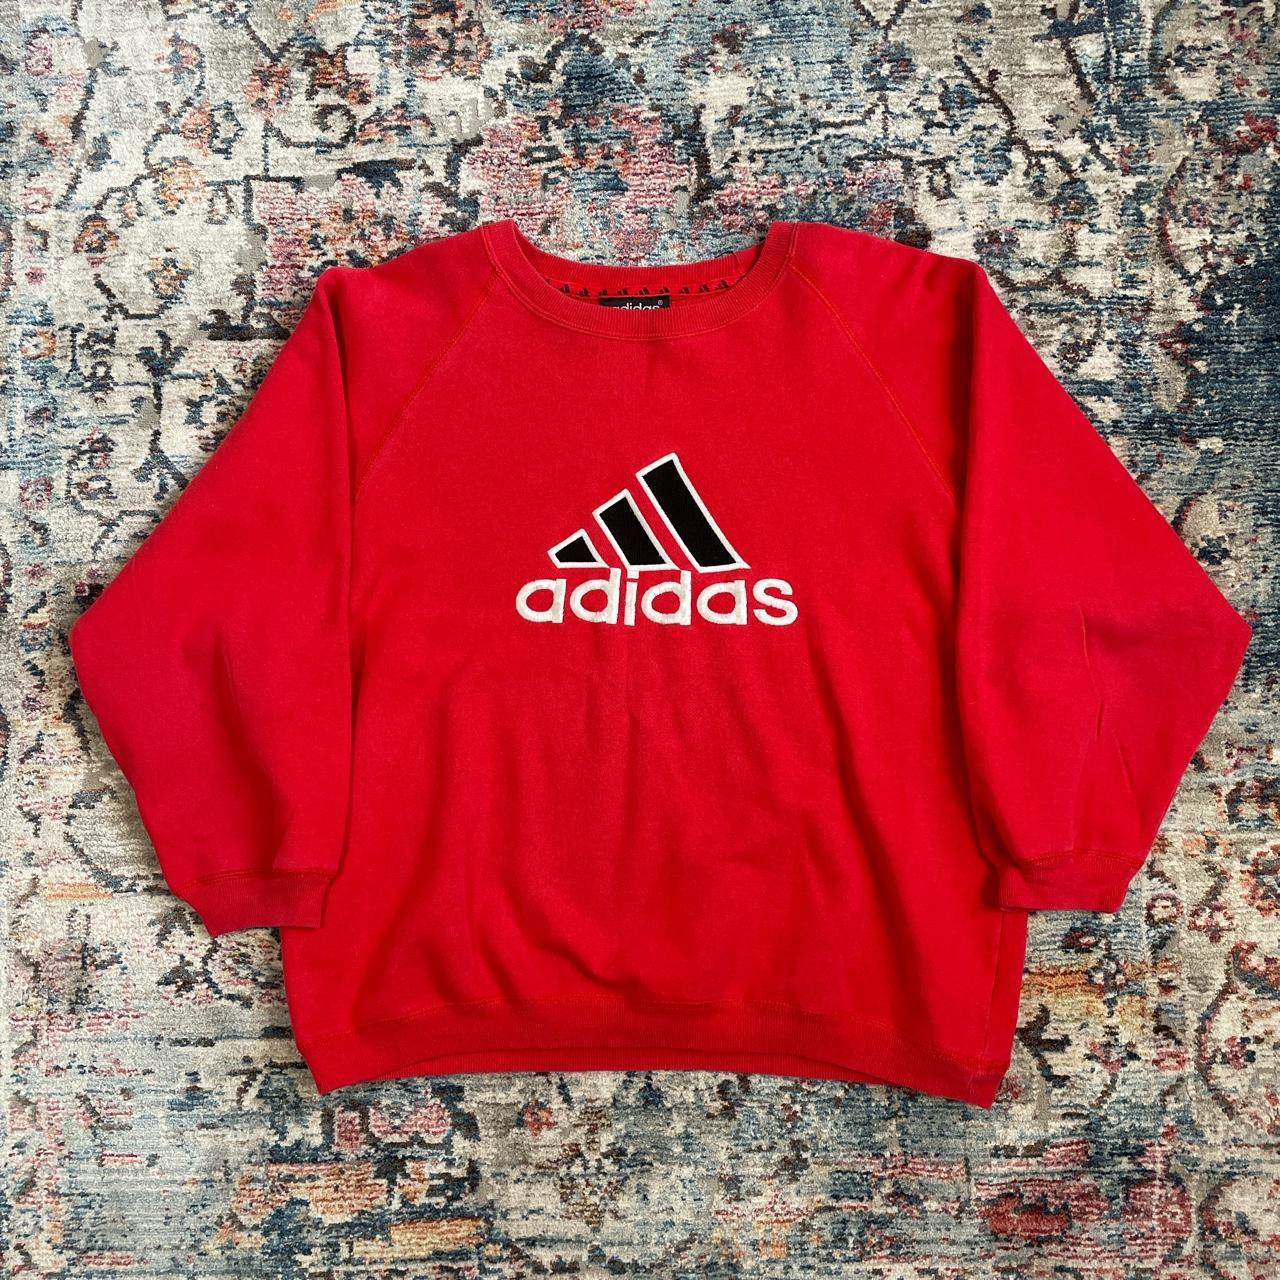 Vintage Adidas Embroidered Red Sweatshirt